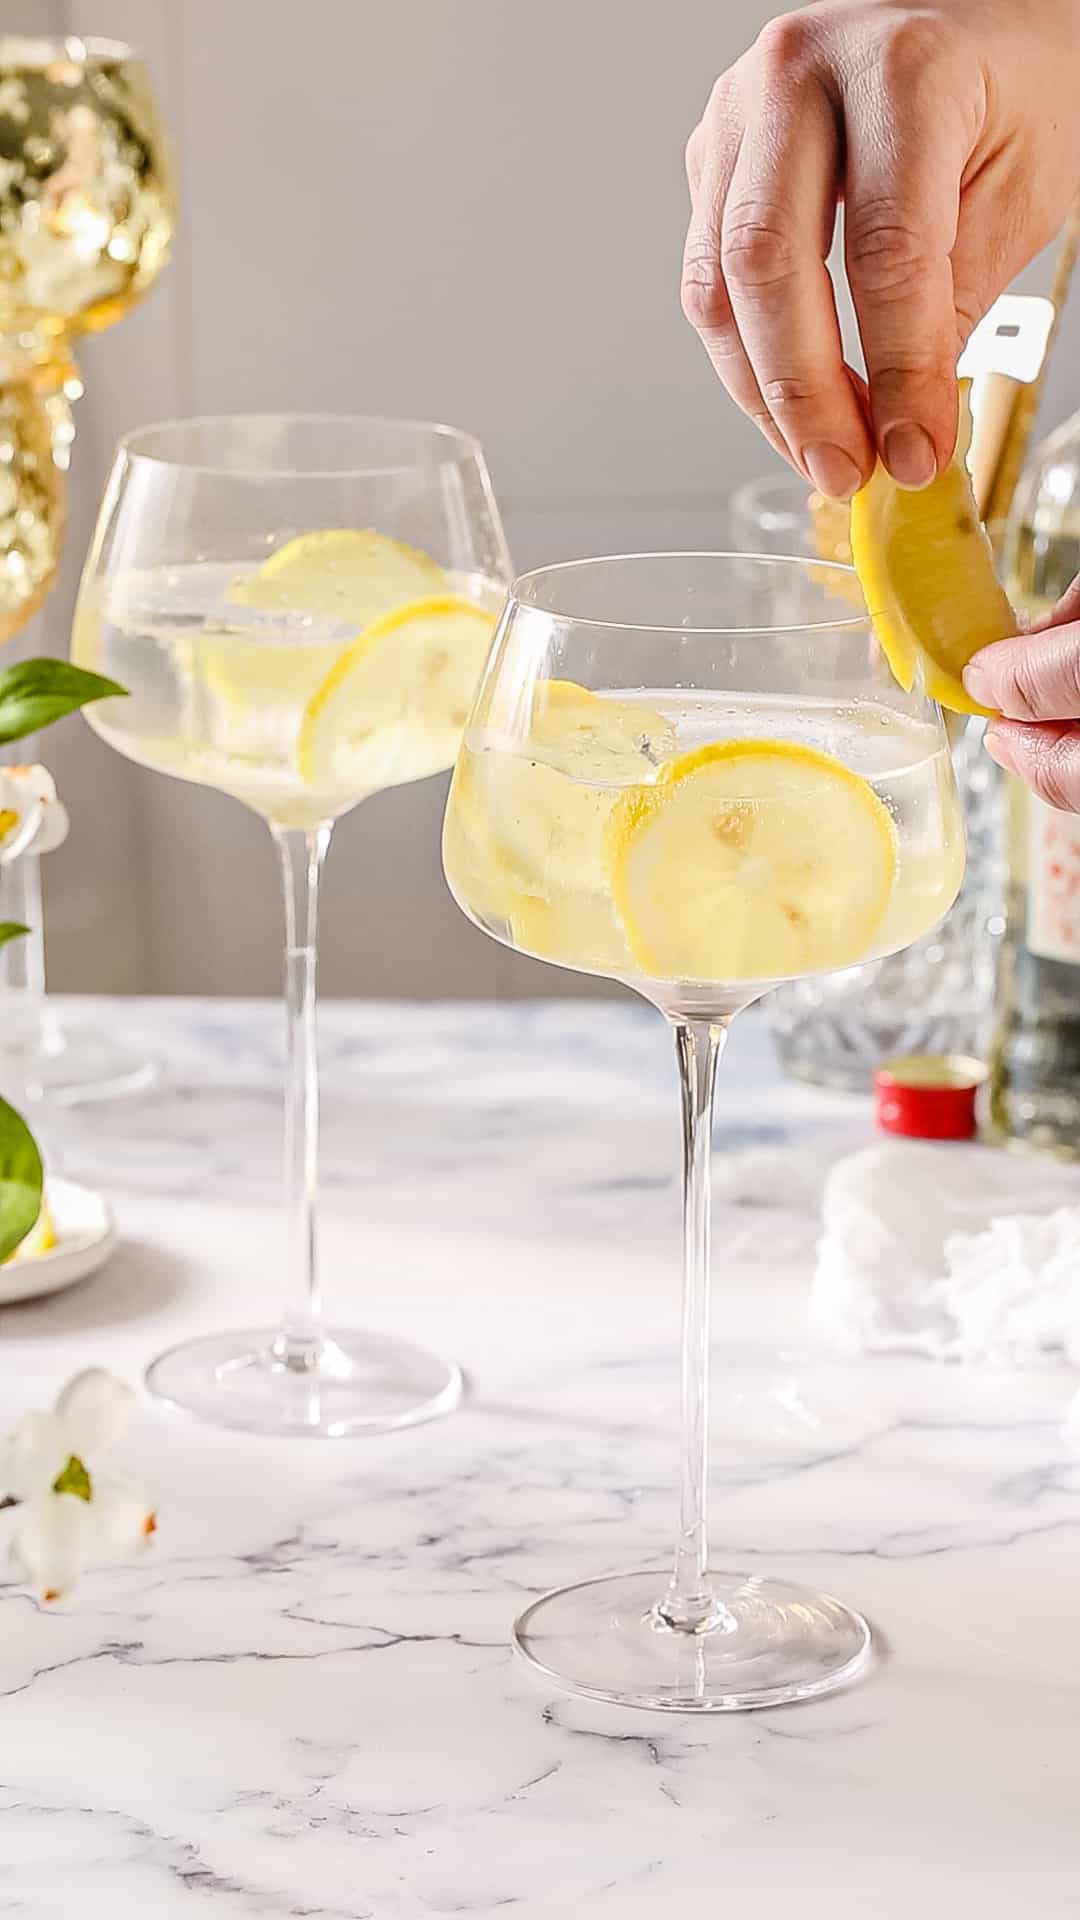 Hand adding a lemon wedge garnish to a cocktail glass.